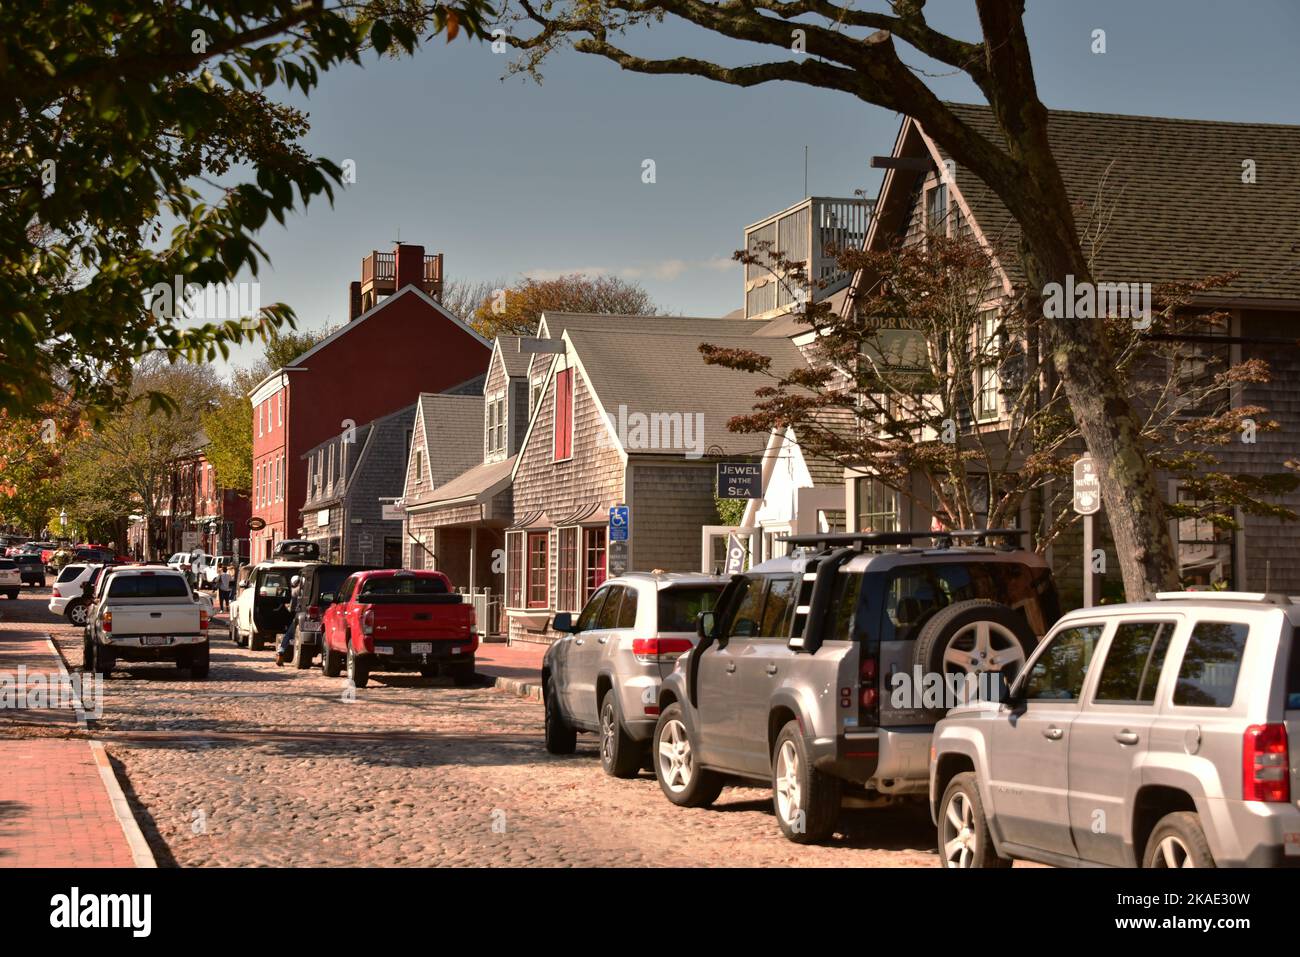 Main Street, Nantucket Island, États-Unis Banque D'Images